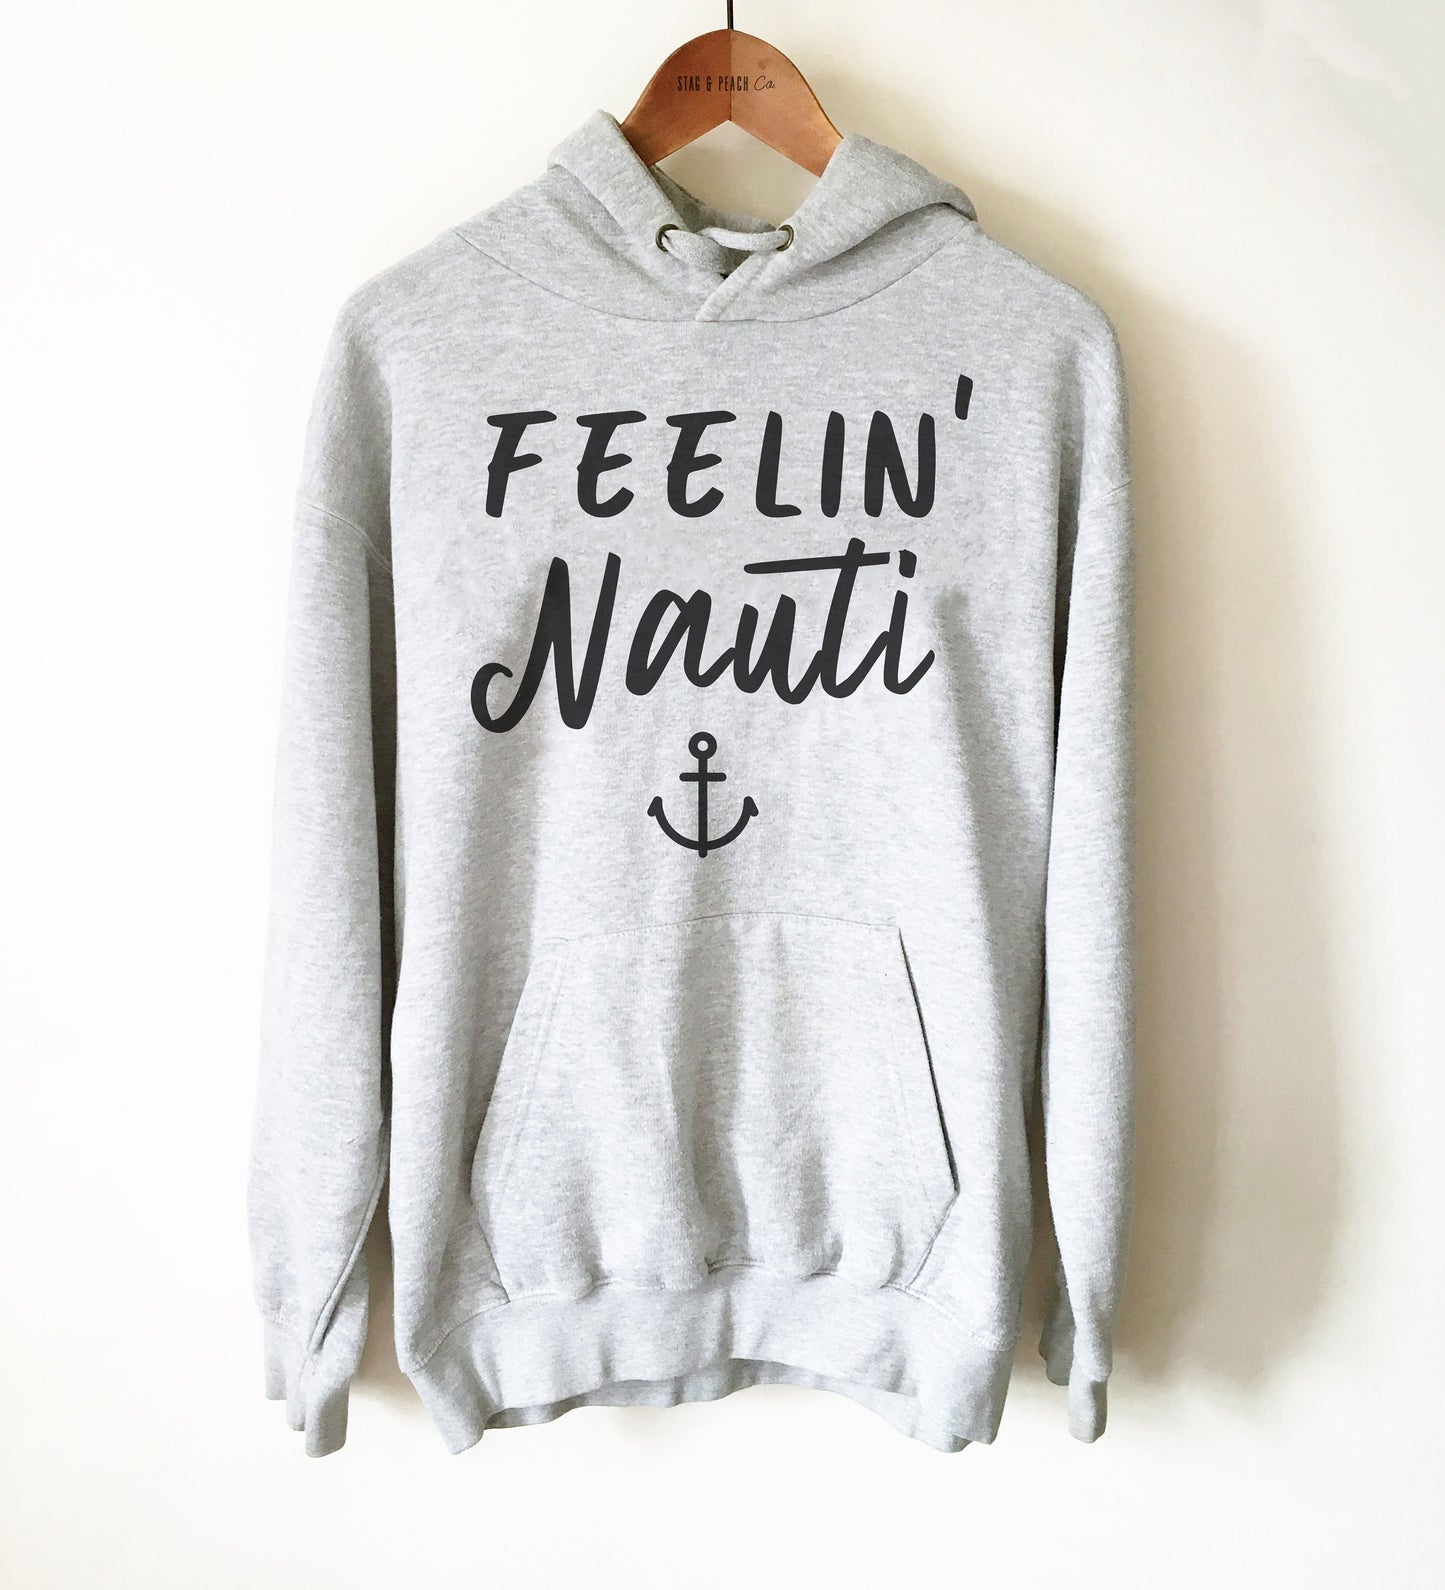 Marine Wife Gift - Feeling Nauti Unisex Hoodie, Boating Gift, Boat Shirt, Sailor Gift, Nautical Clothing, Boat Apparel, Boat Cruise Trip,